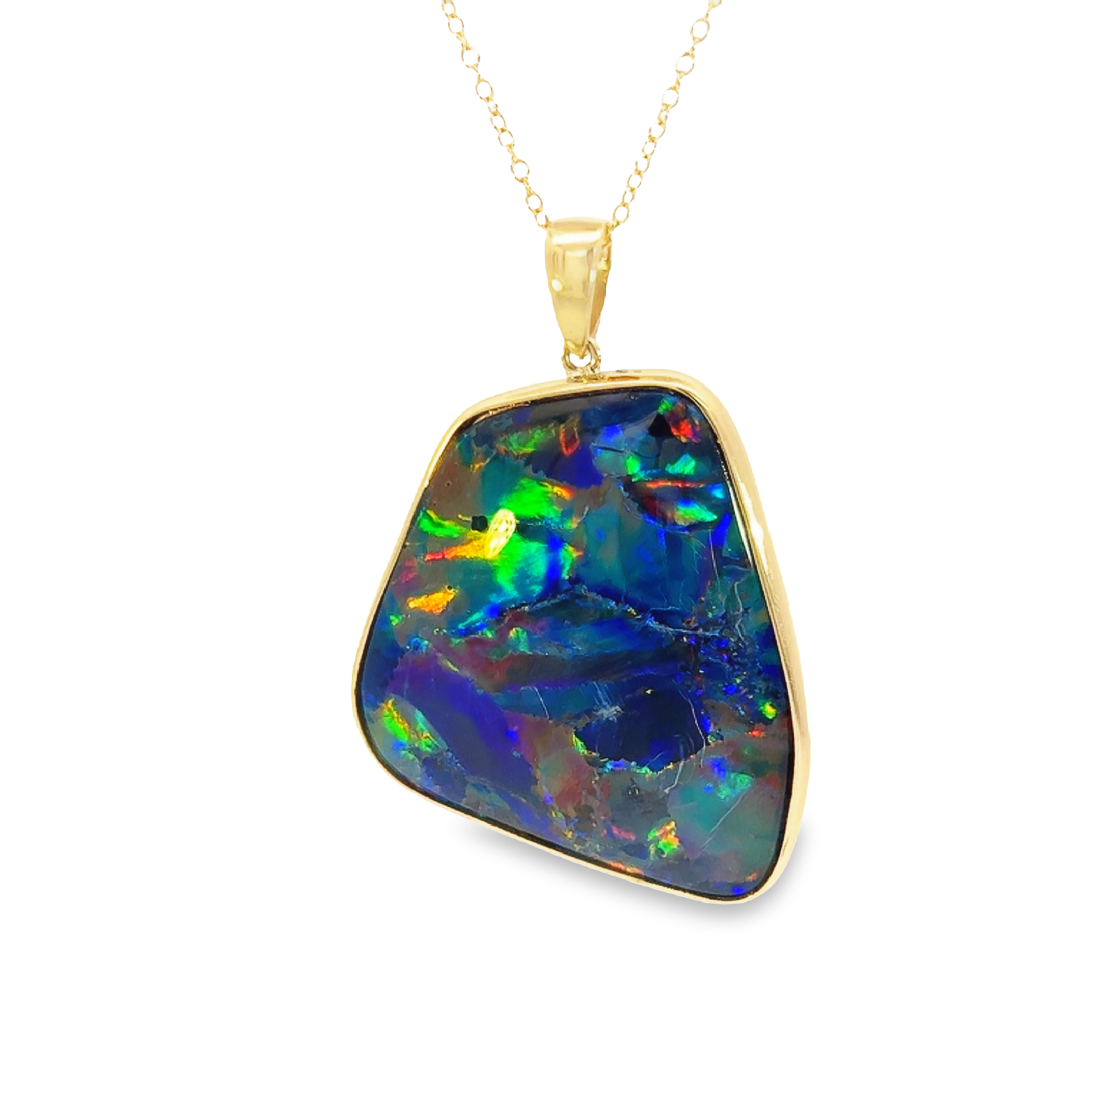 9kt Yellow Gold Opal necklace 35x31mm Triplet - Masterpiece Jewellery Opal & Gems Sydney Australia | Online Shop